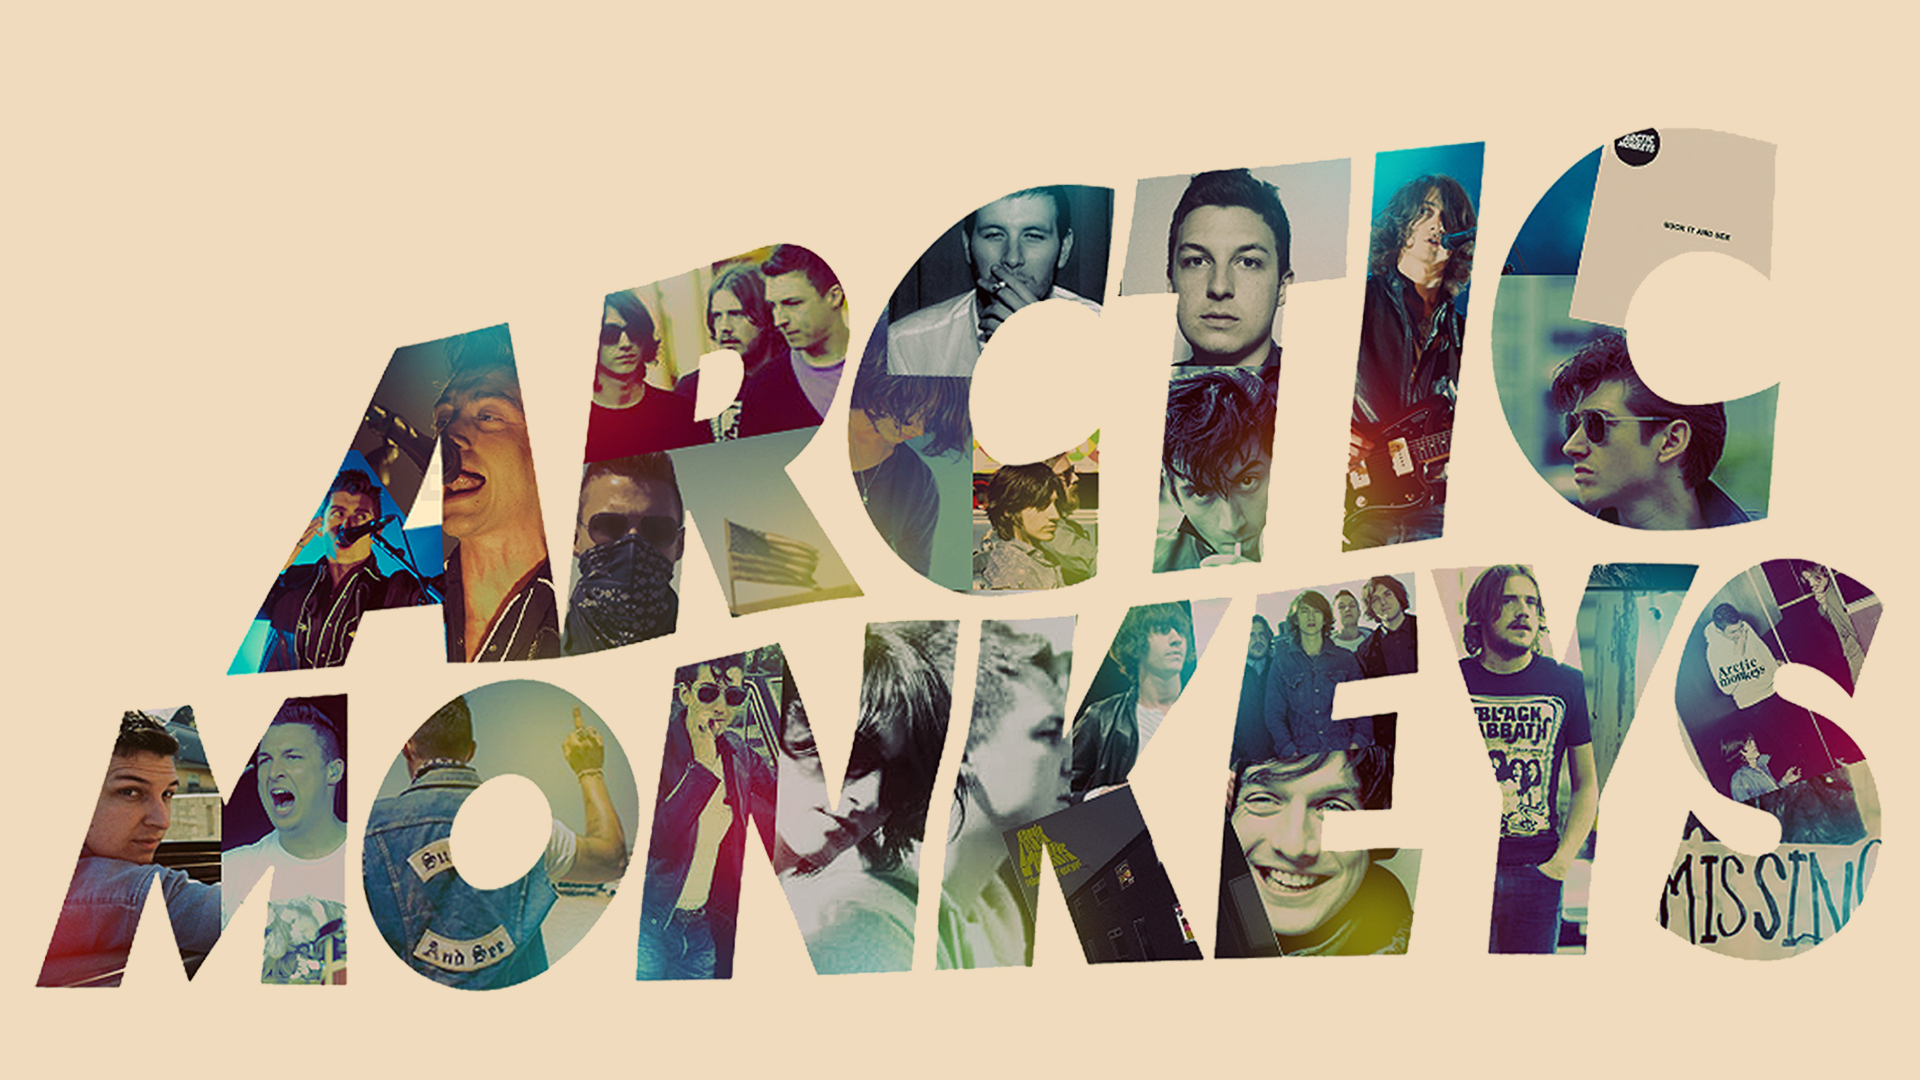 arctic monkeys, music, english, rock band Image for desktop